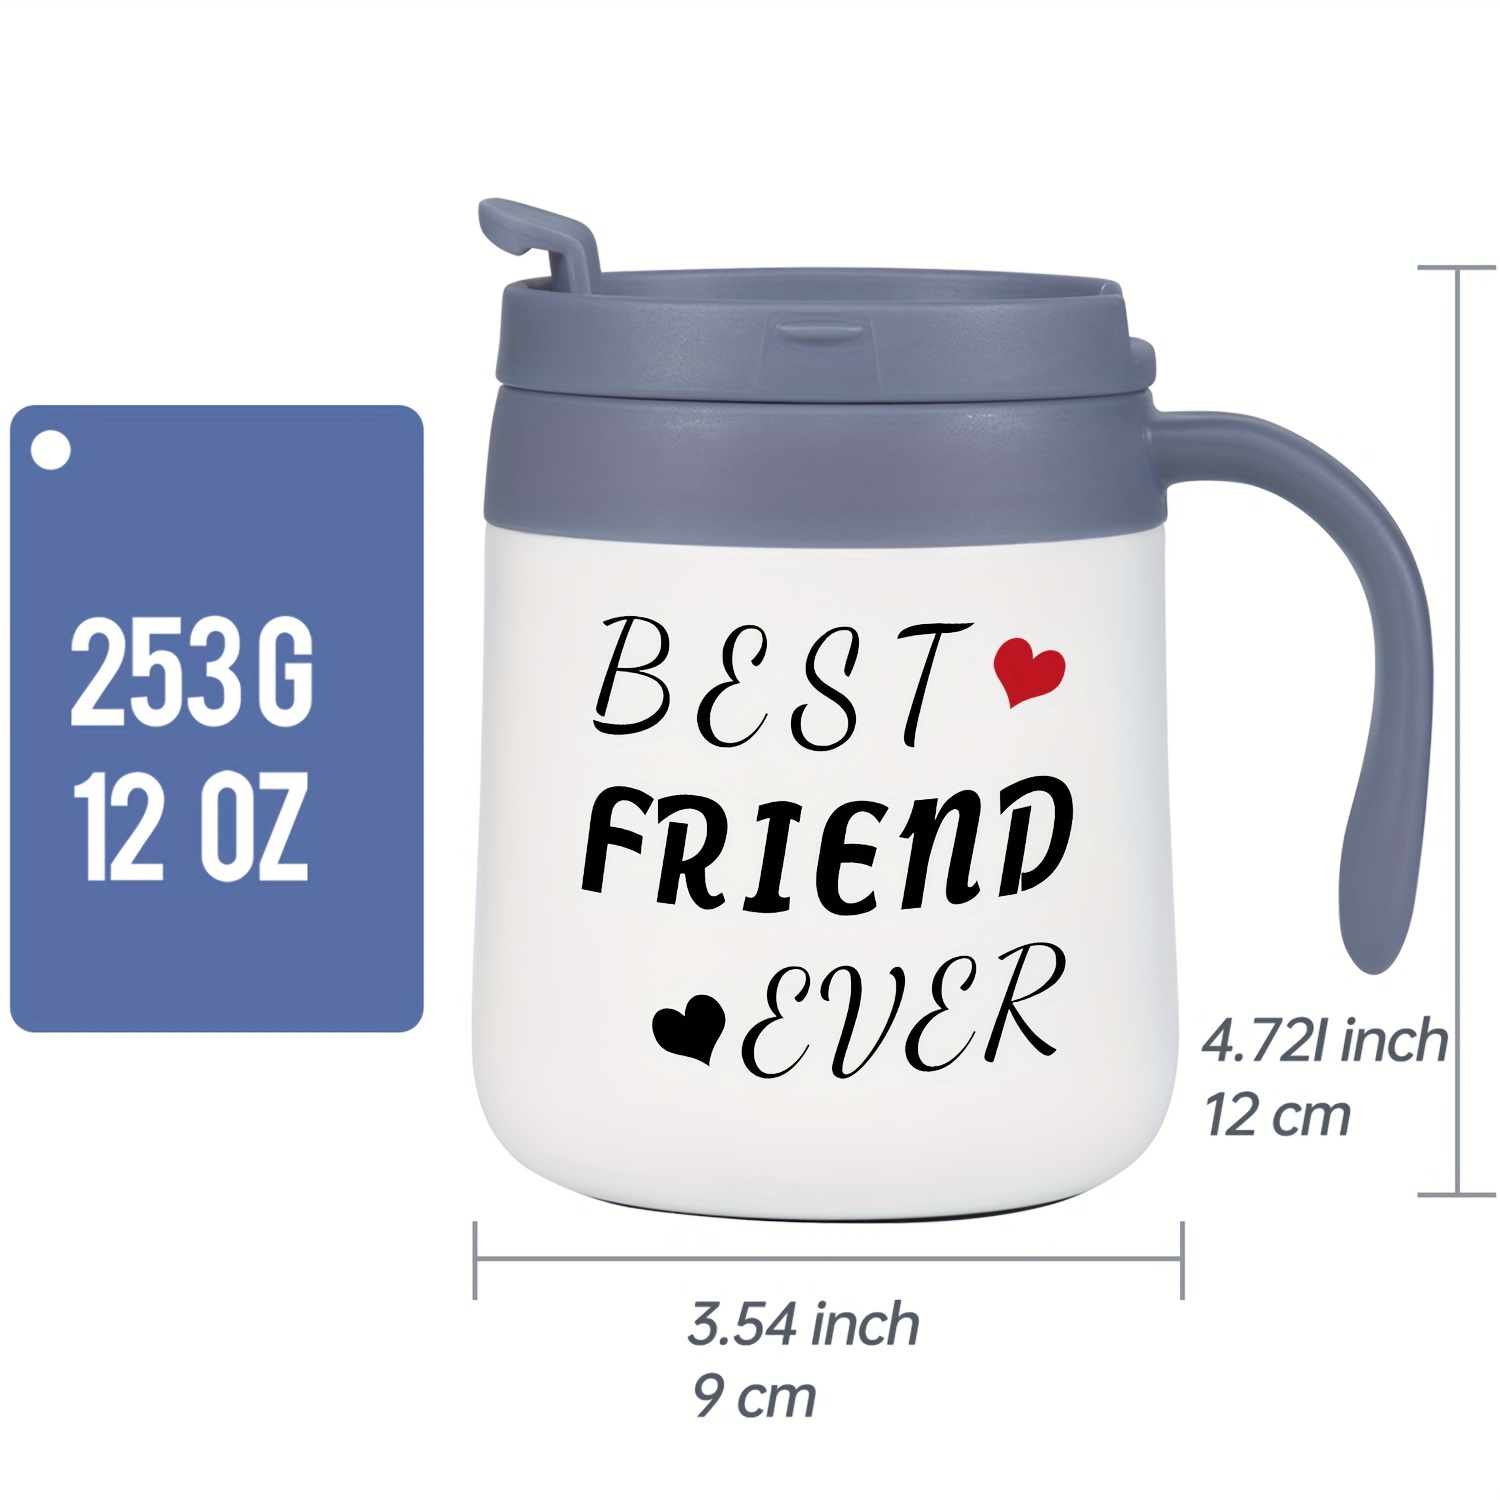 Best Friends Forever - Engraved Stainless Steel Tumbler, Best Friend Gift,  Bestie Mug